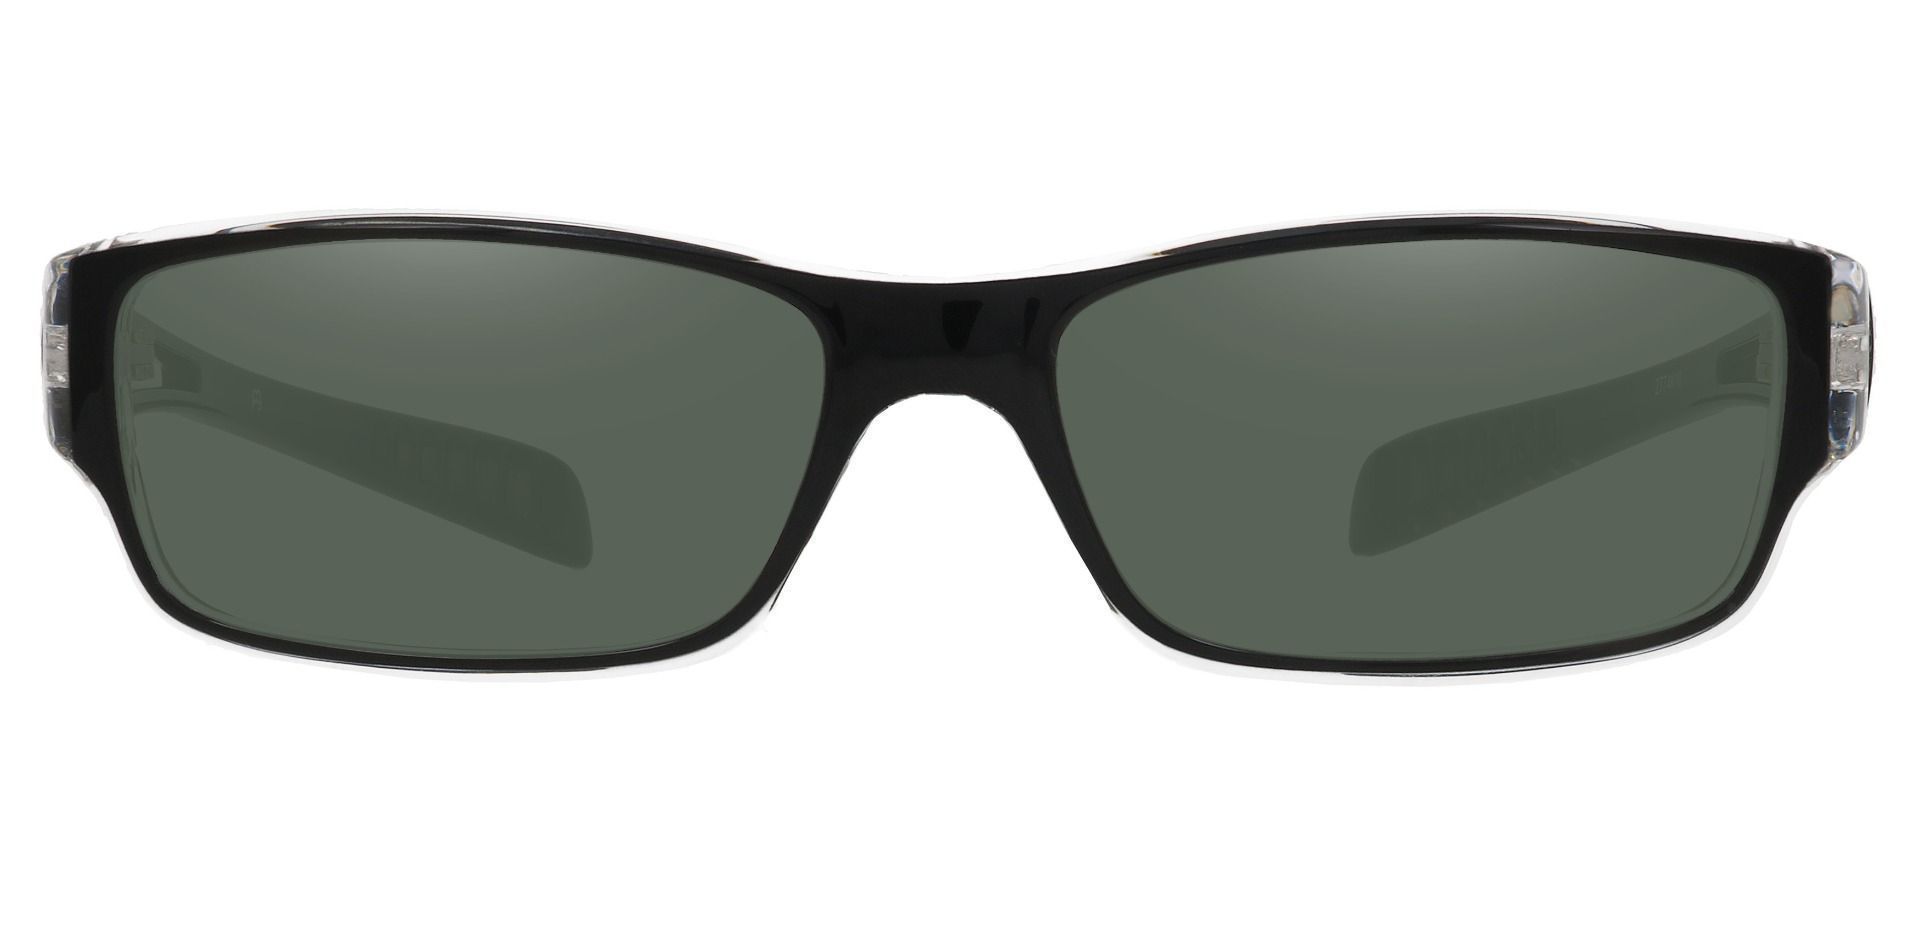 Mercury Rectangle Prescription Sunglasses - Black Frame With Green Lenses